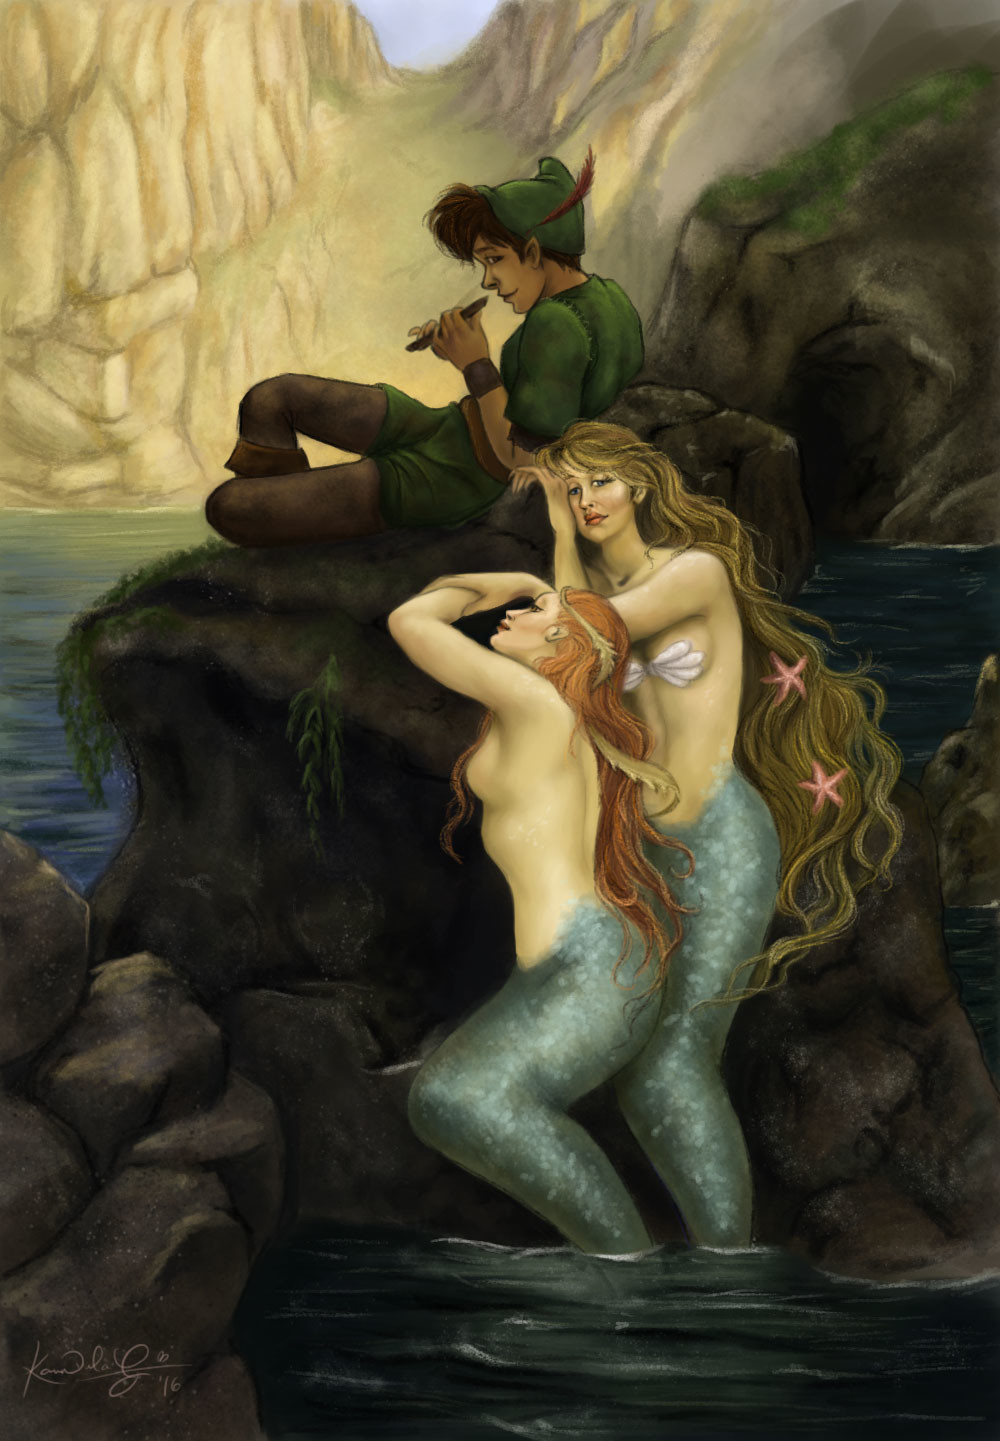 Peter Pan and the mermaids.